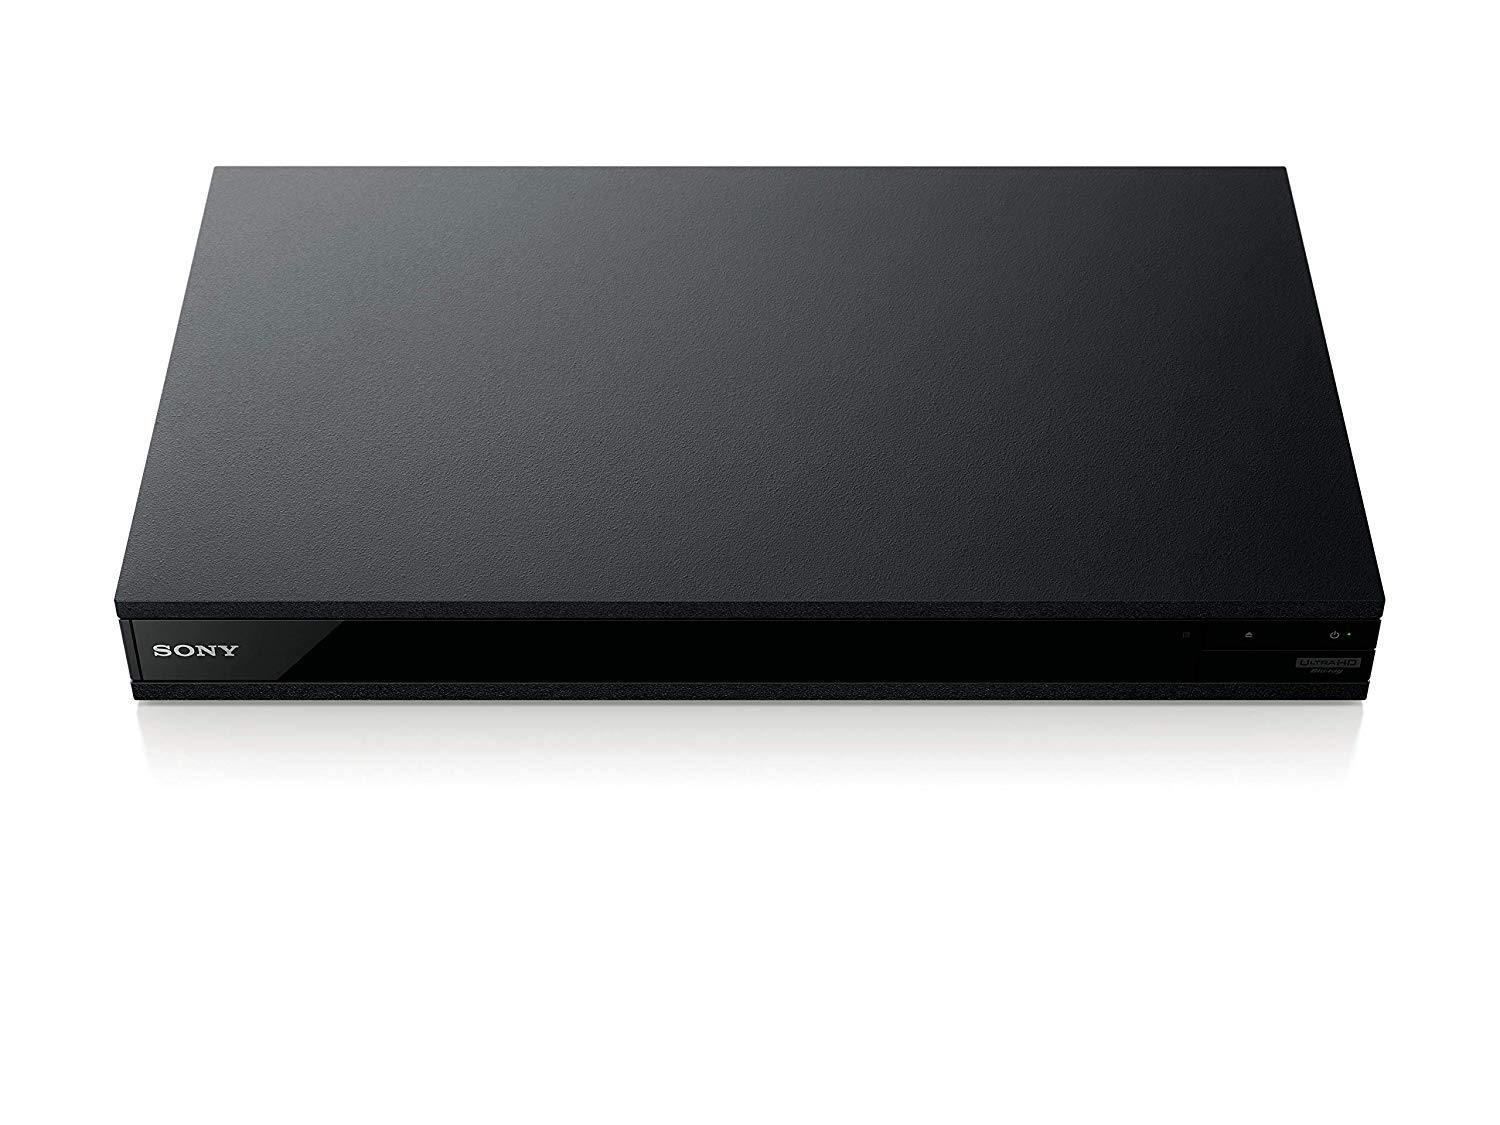 Sony UBP-X800M2 4K UHD Blu-ray Disc Player